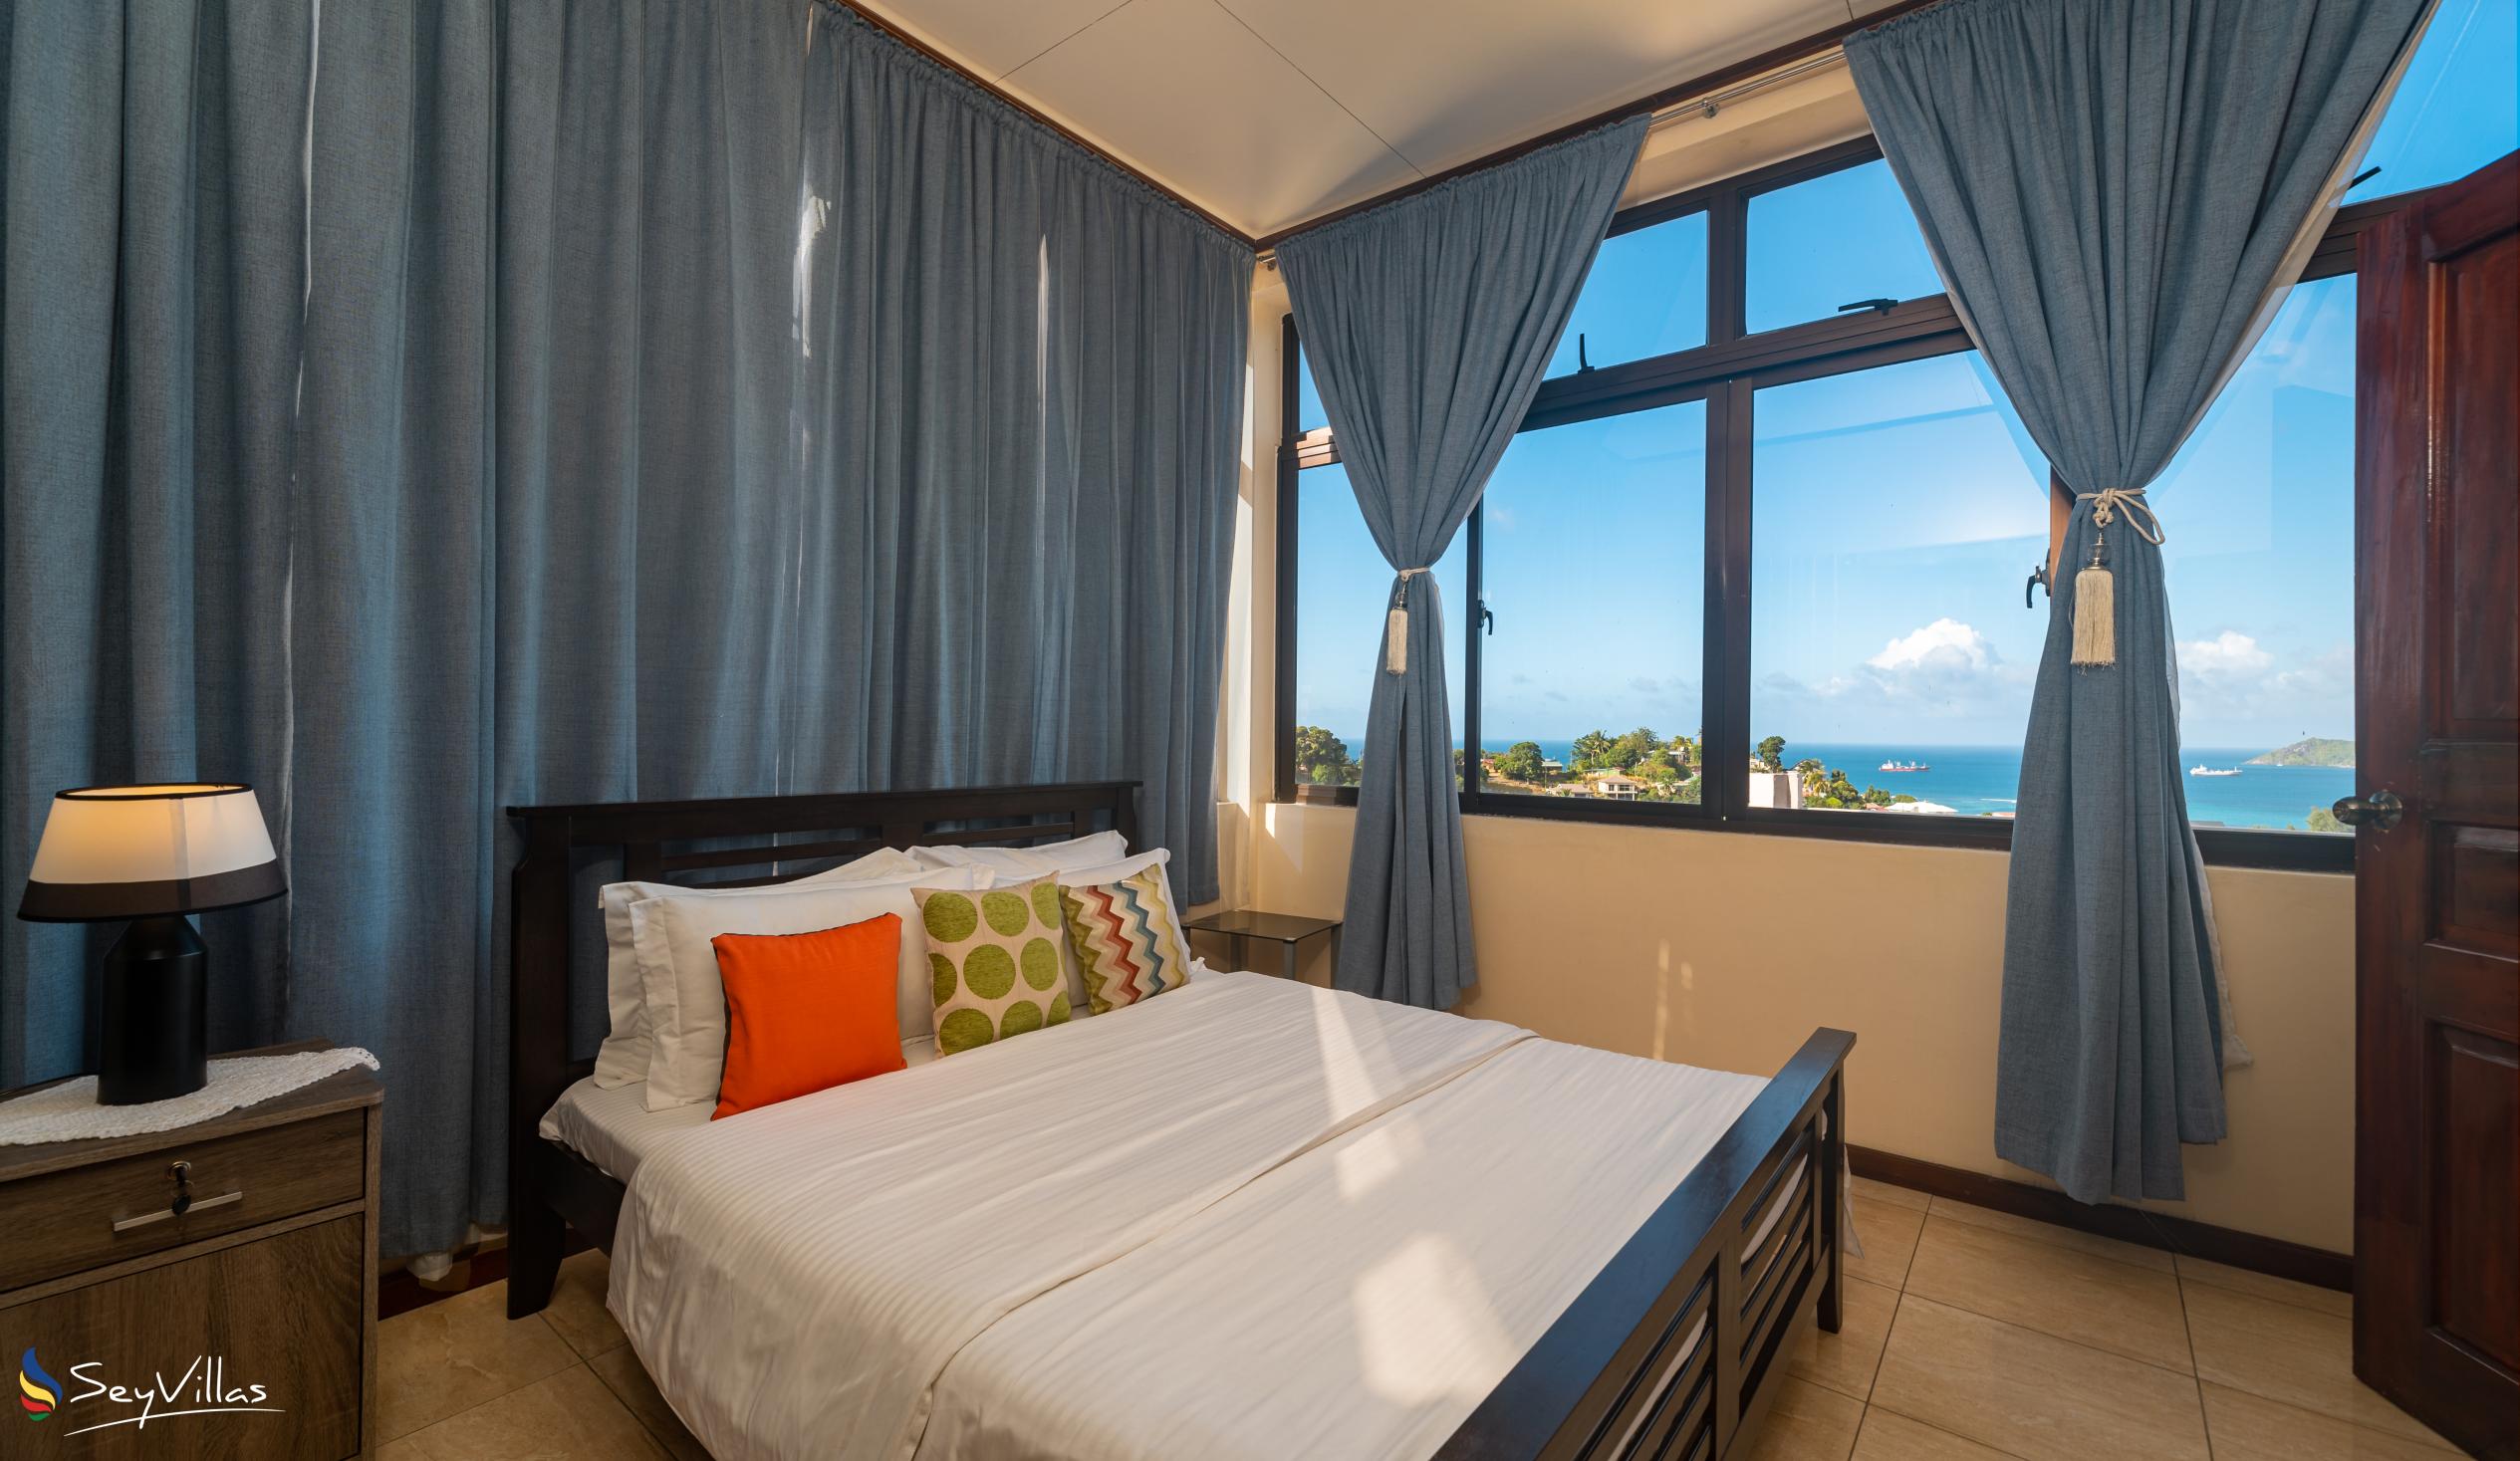 Photo 81: Maison L'Horizon - 3-Bedroom Apartment Lorizon - Mahé (Seychelles)